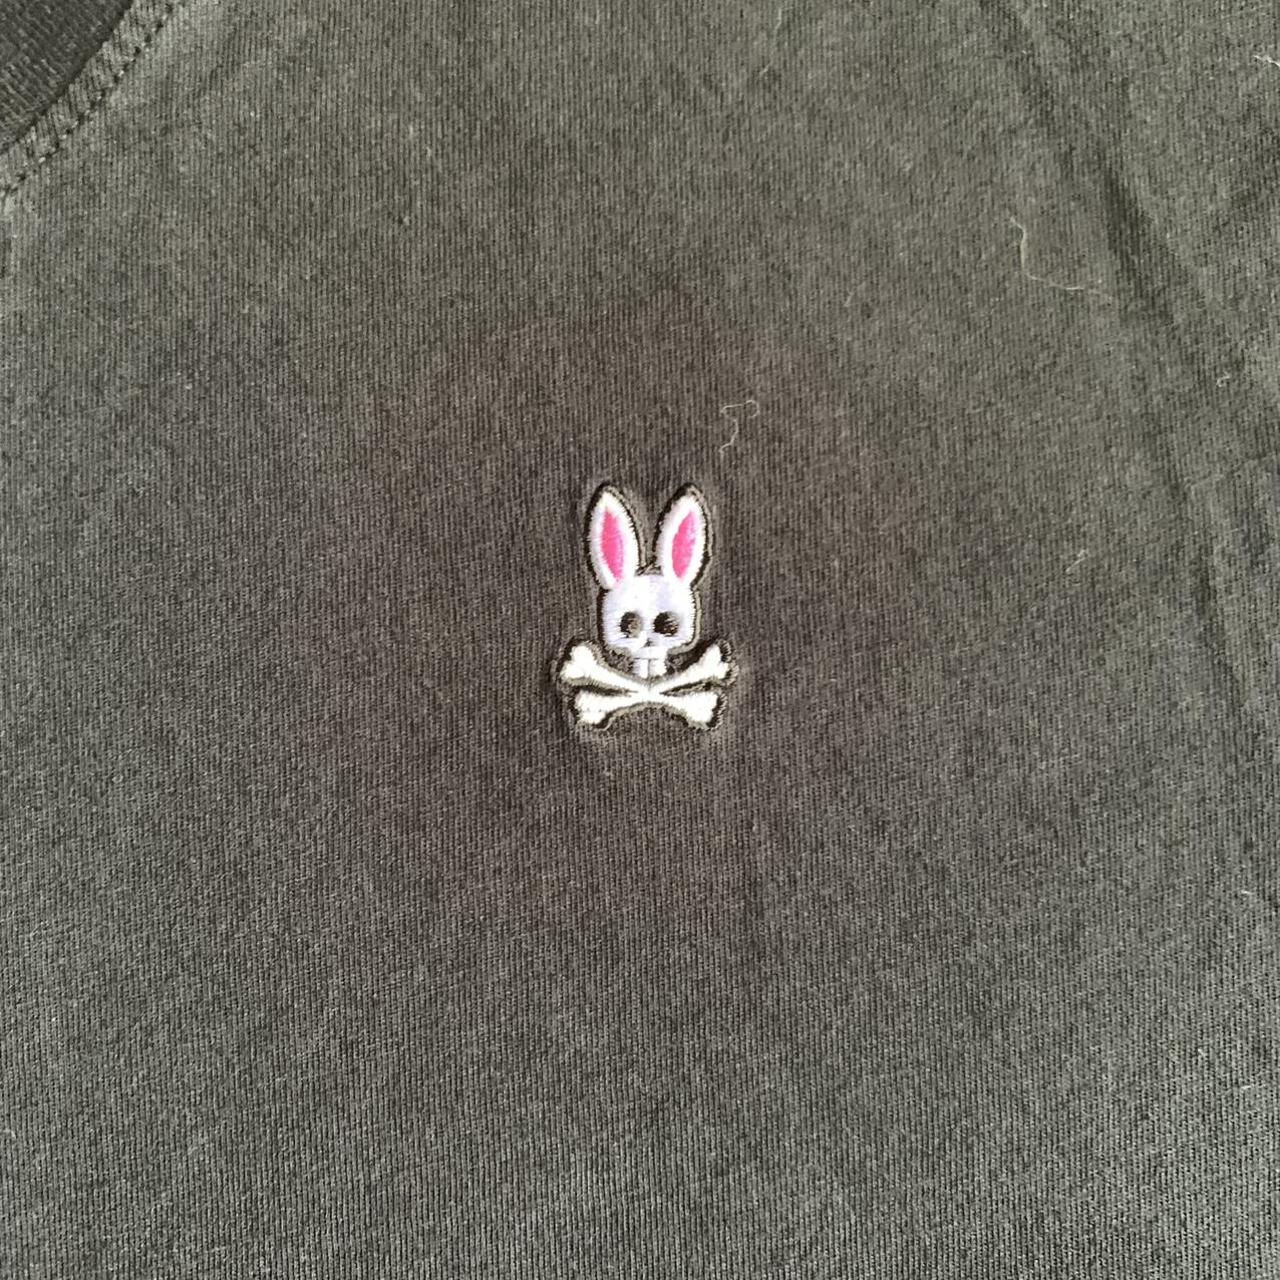 Psycho Bunny Men's T-shirt (2)